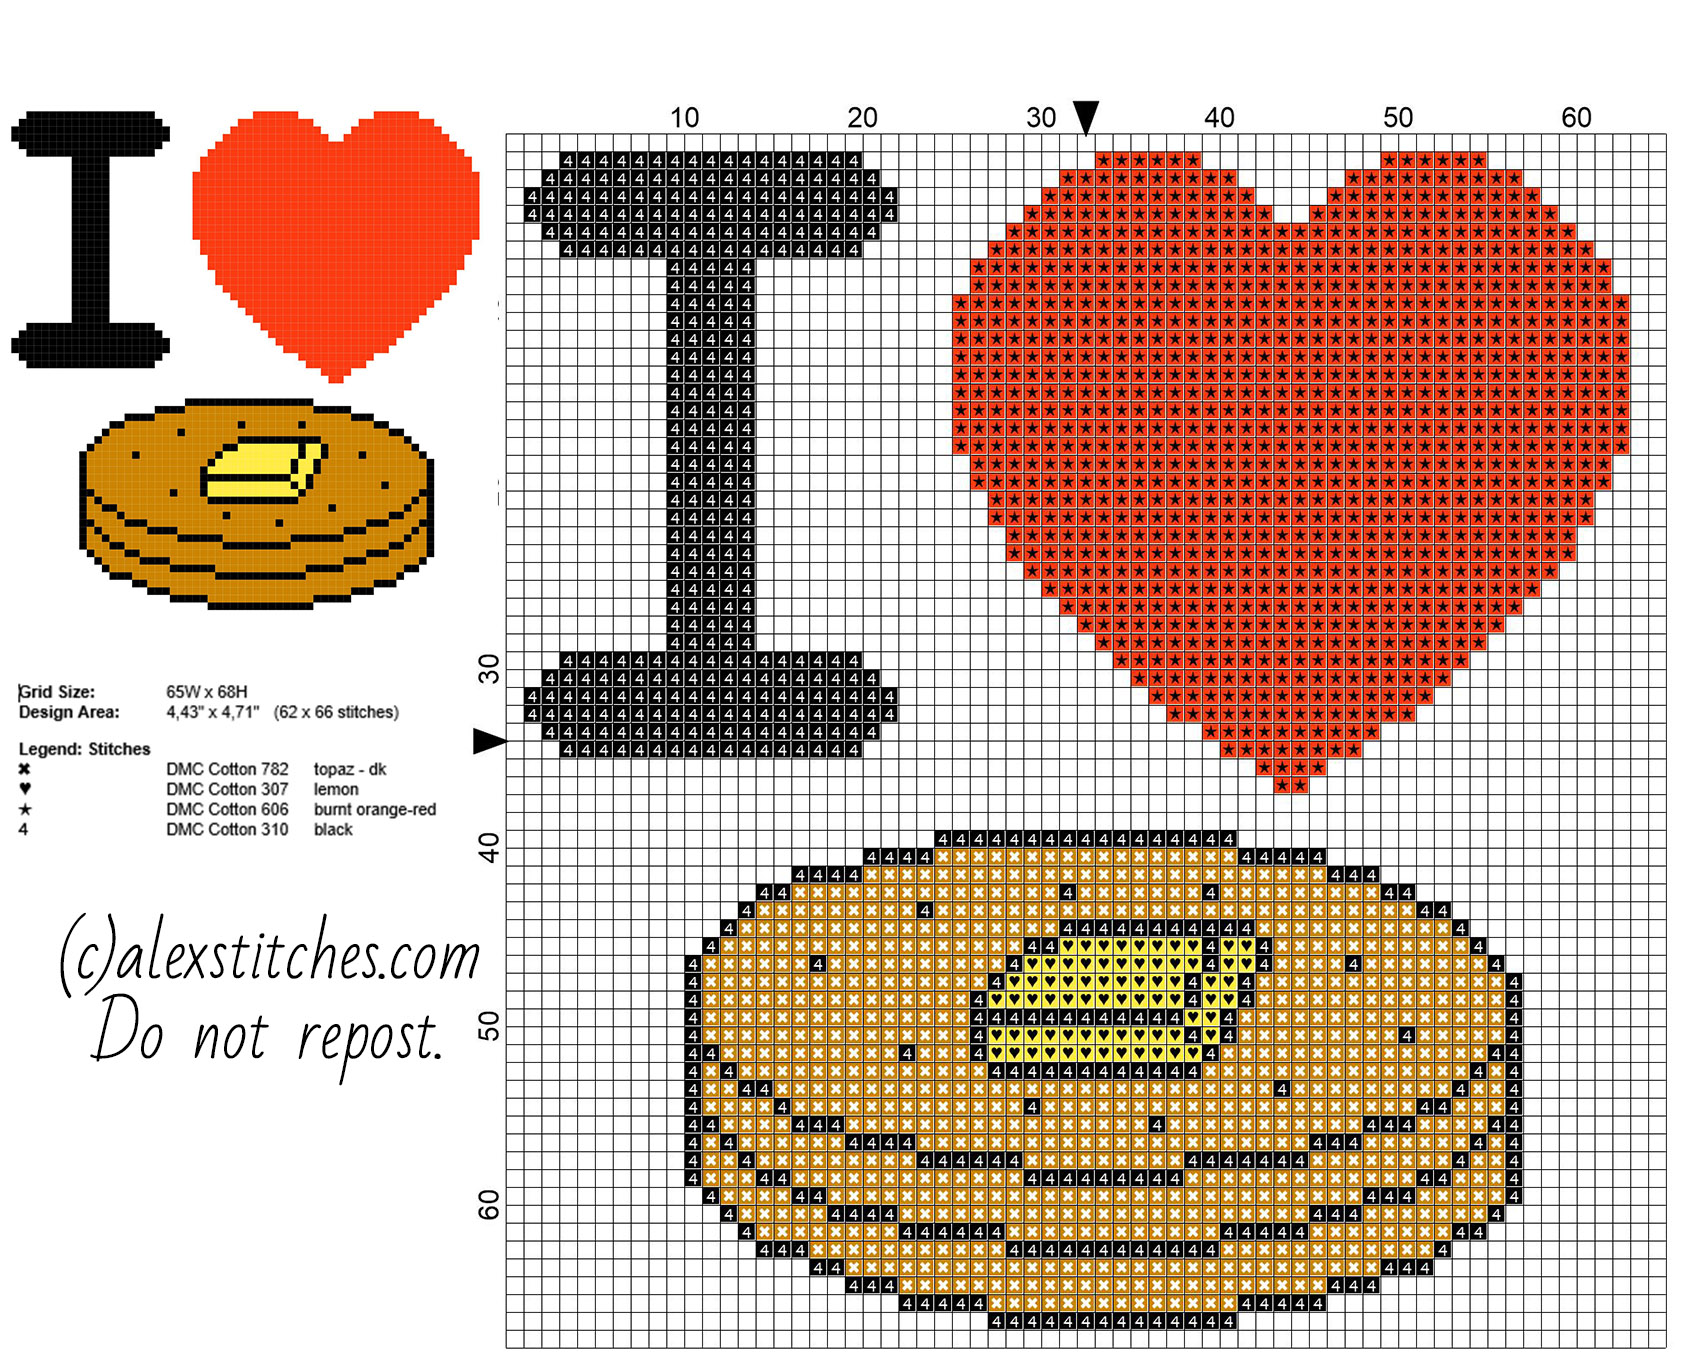 I love pancakes free cross stitch pattern download